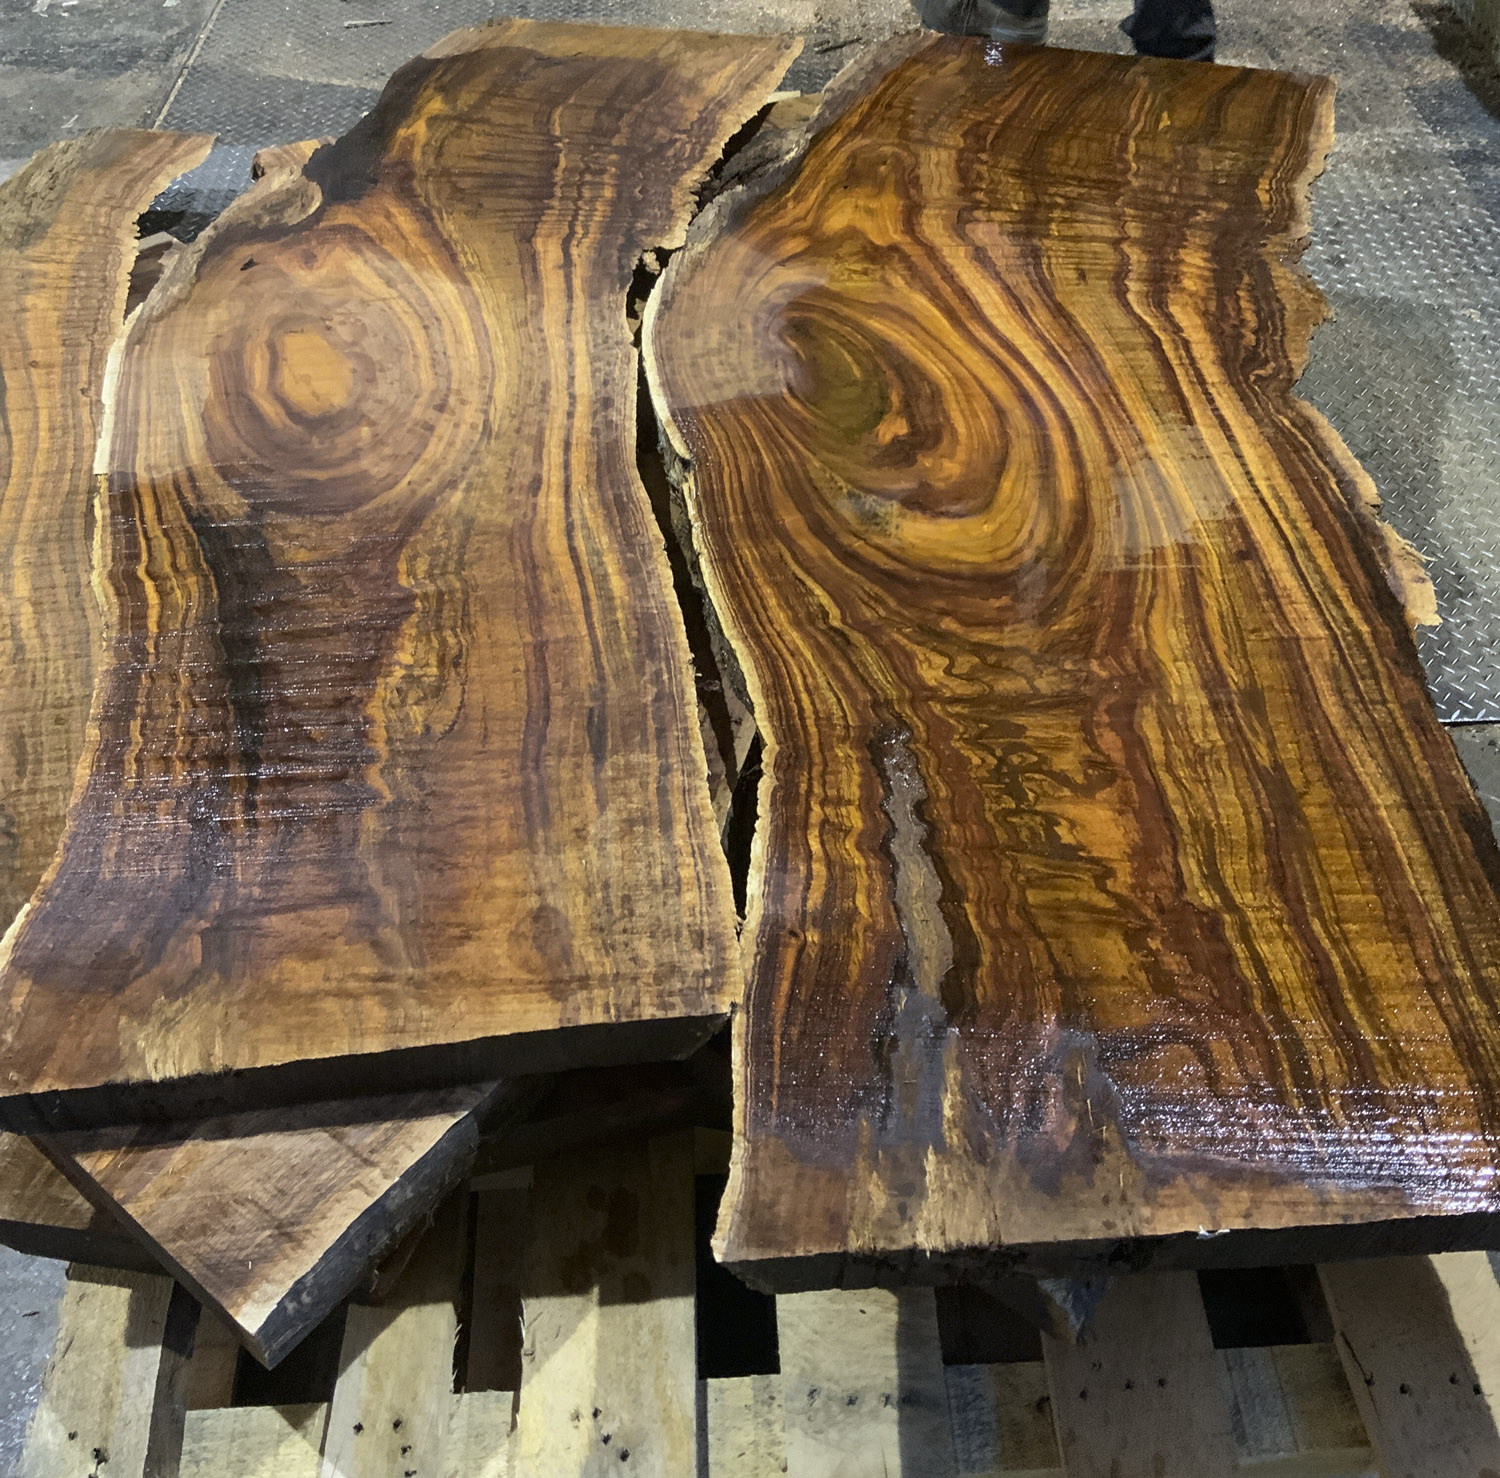 Buy figured koa wood at Hearne Hardwoods Inc.